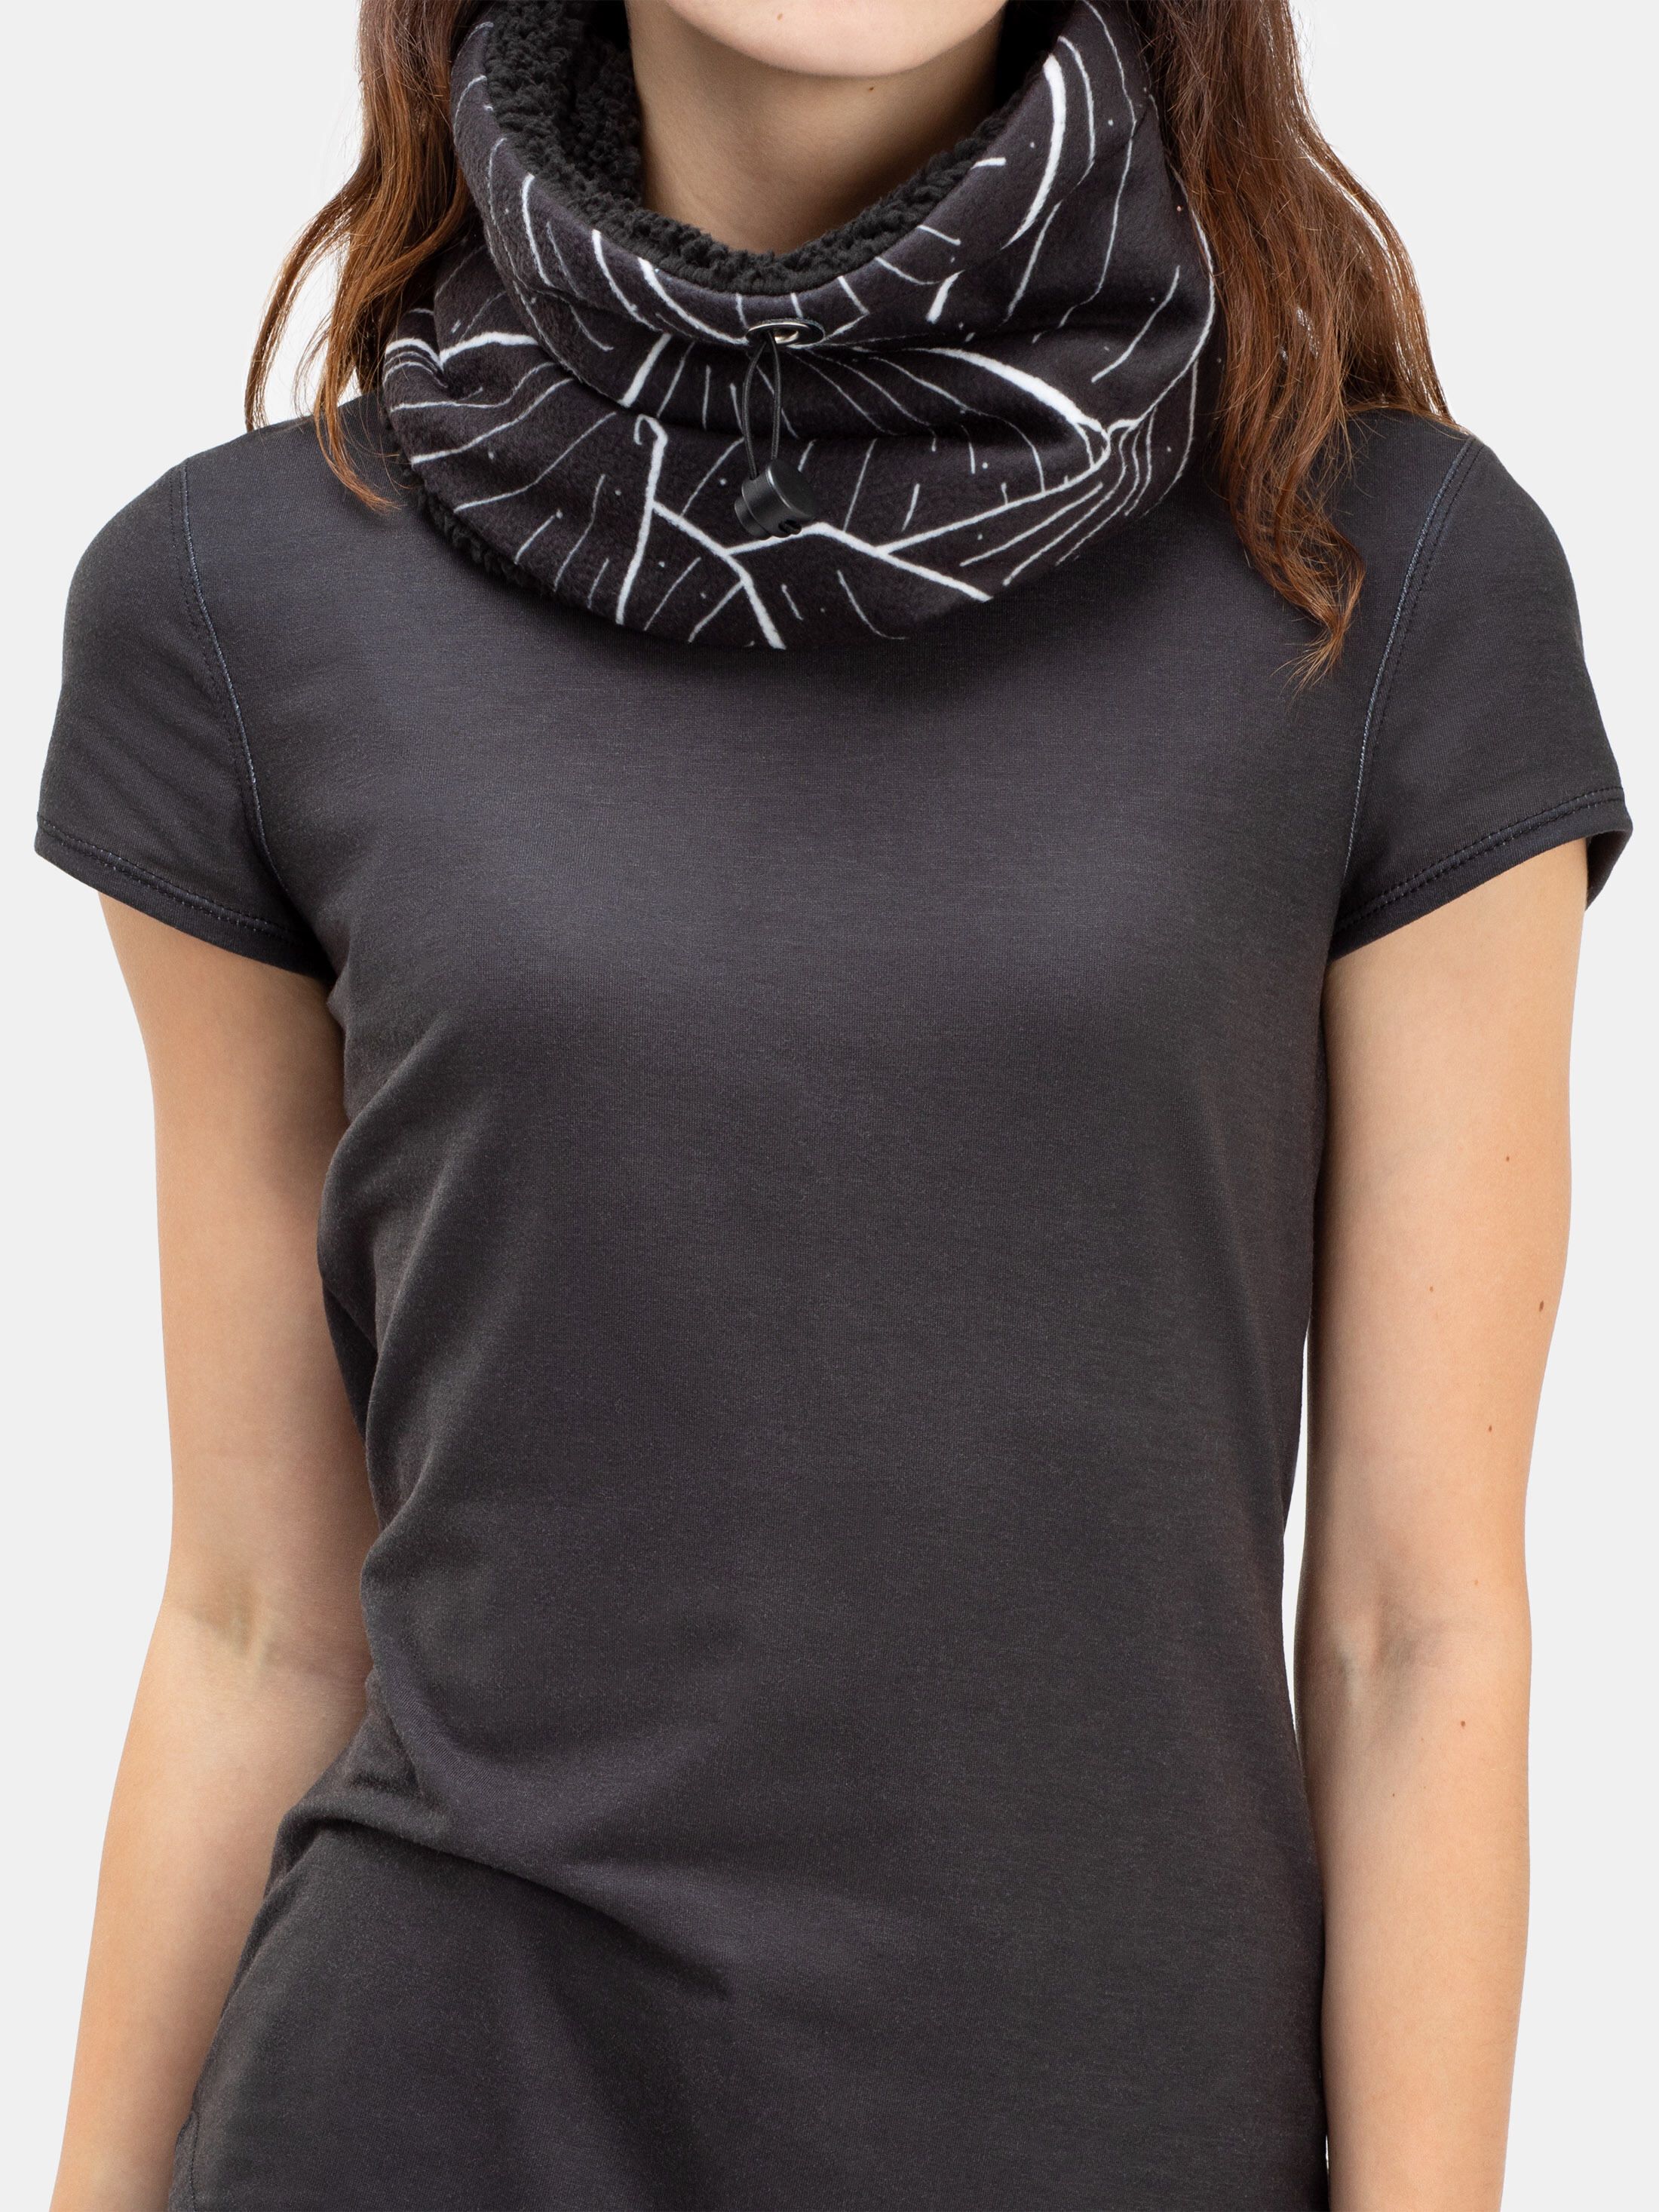 Print your own fleece infinity scarf